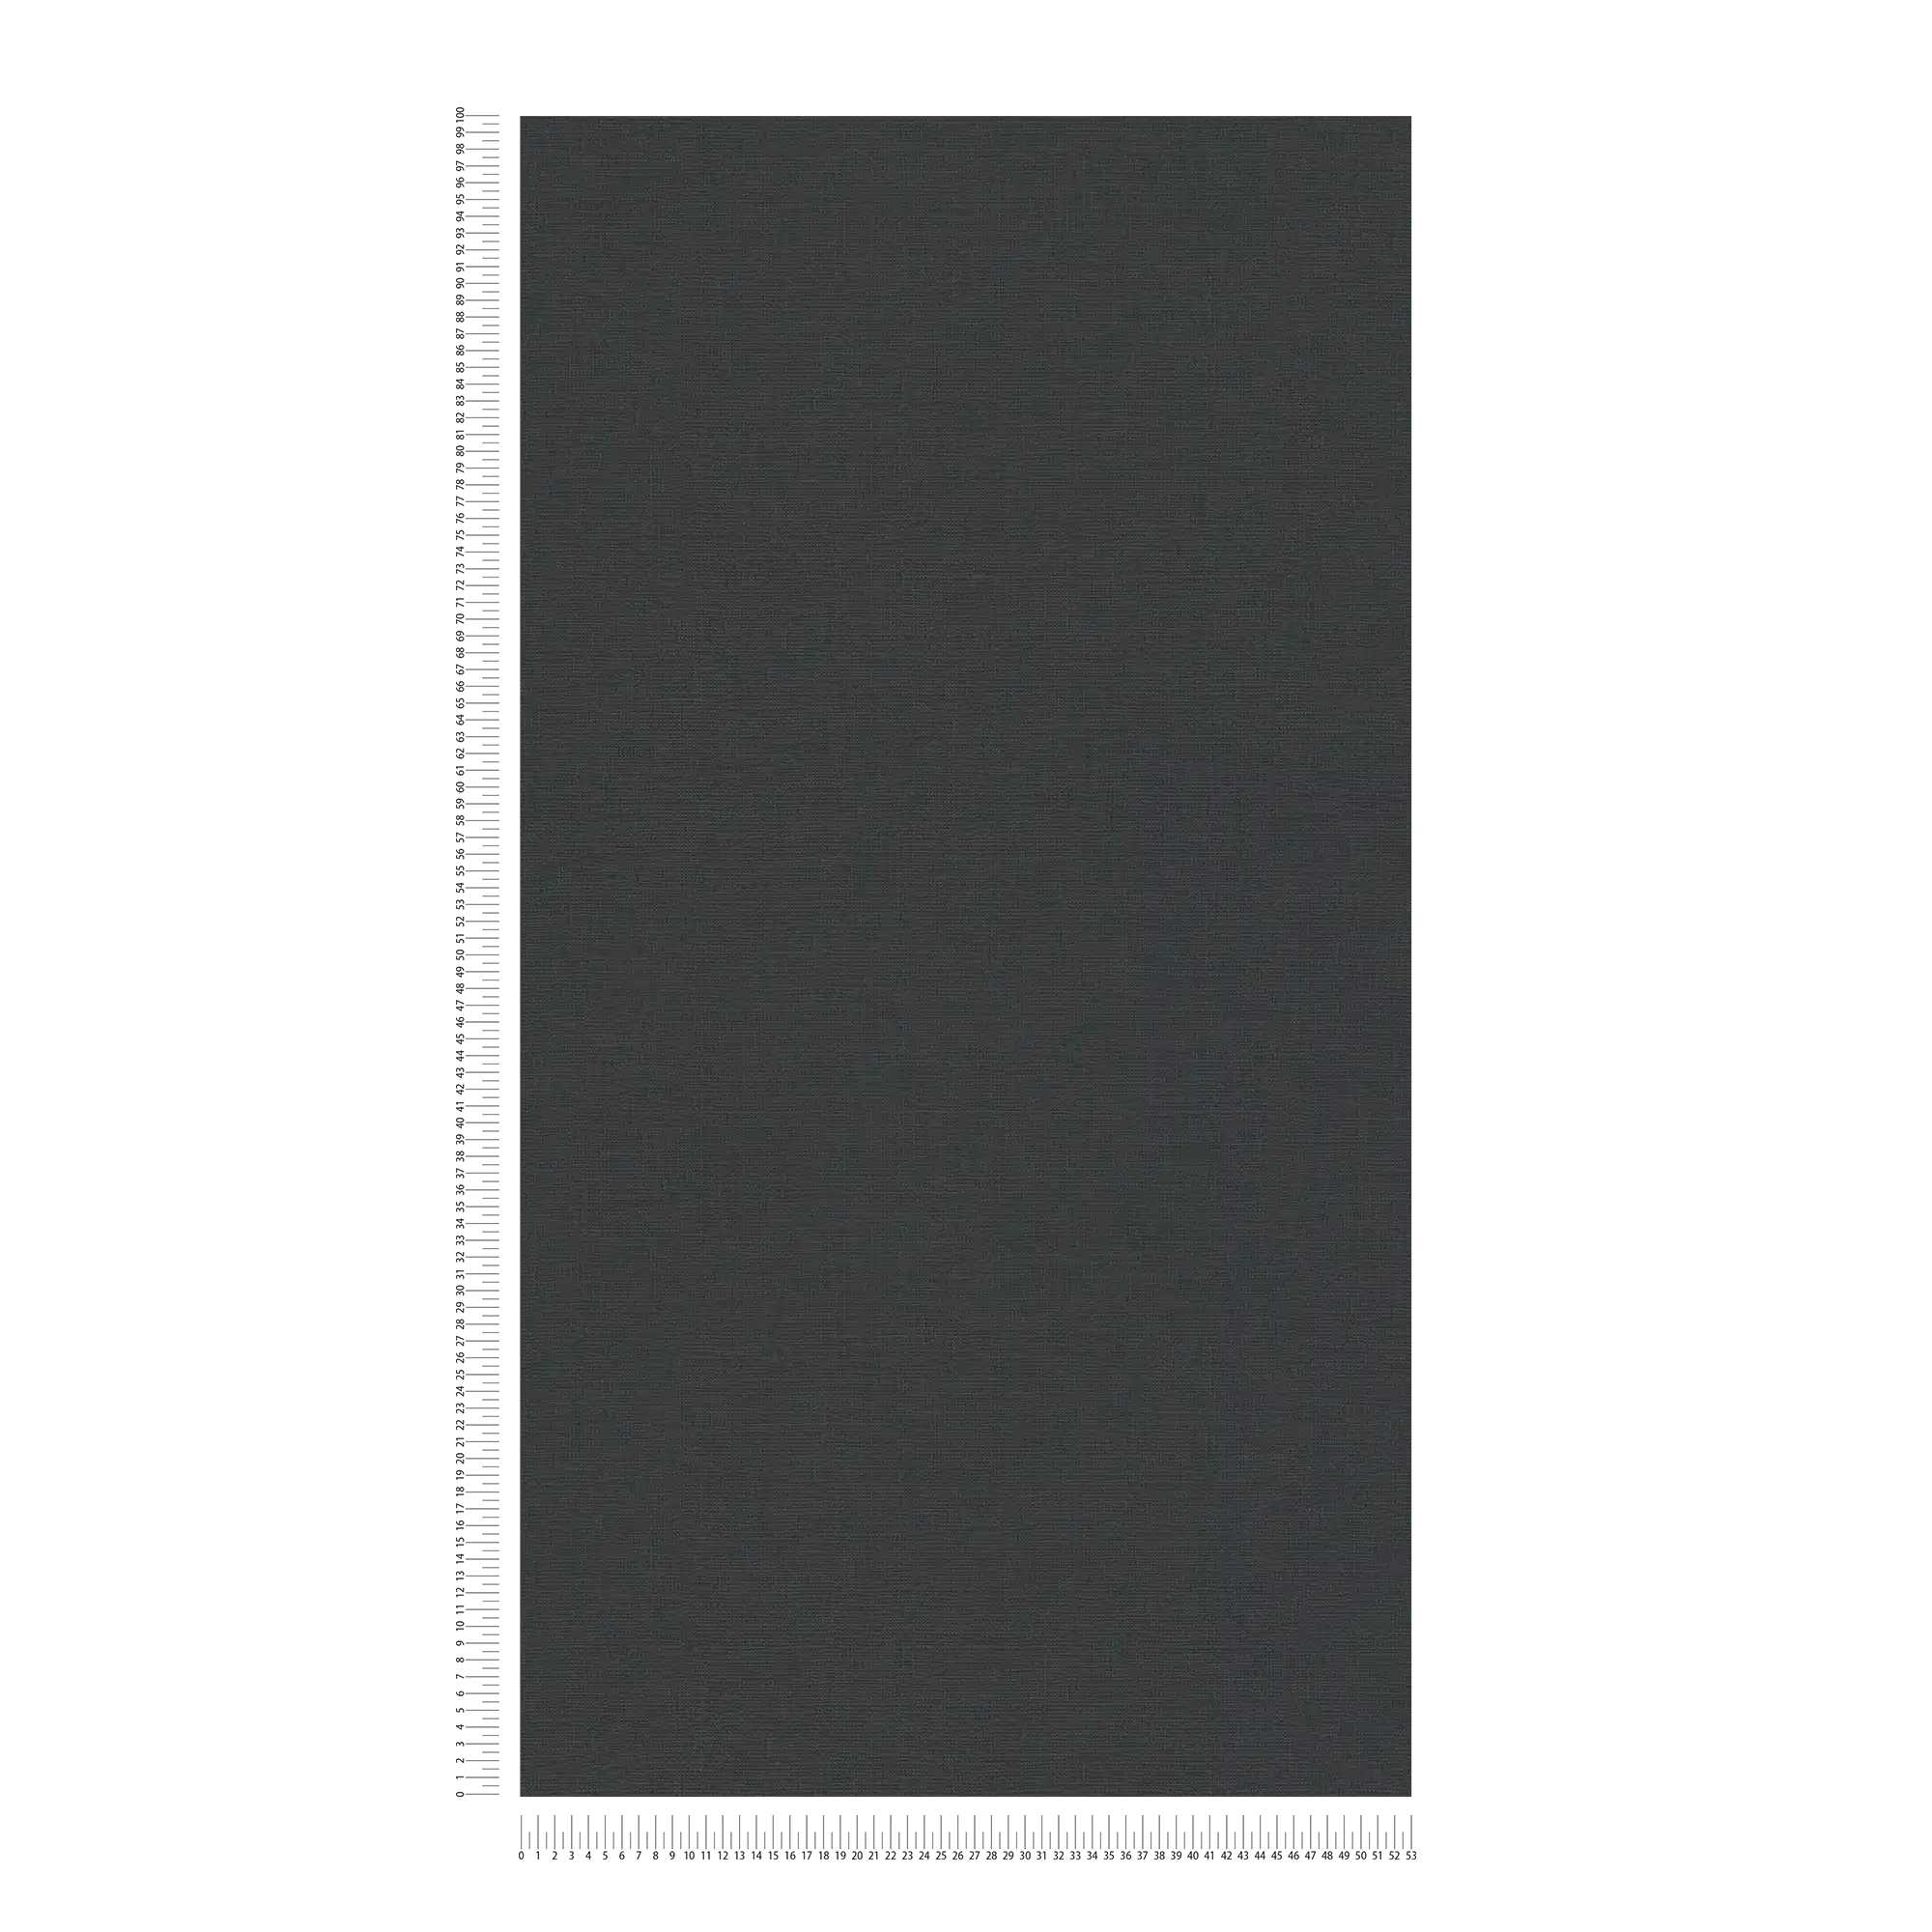             Non-woven wallpaper plain with linen texture - black
        